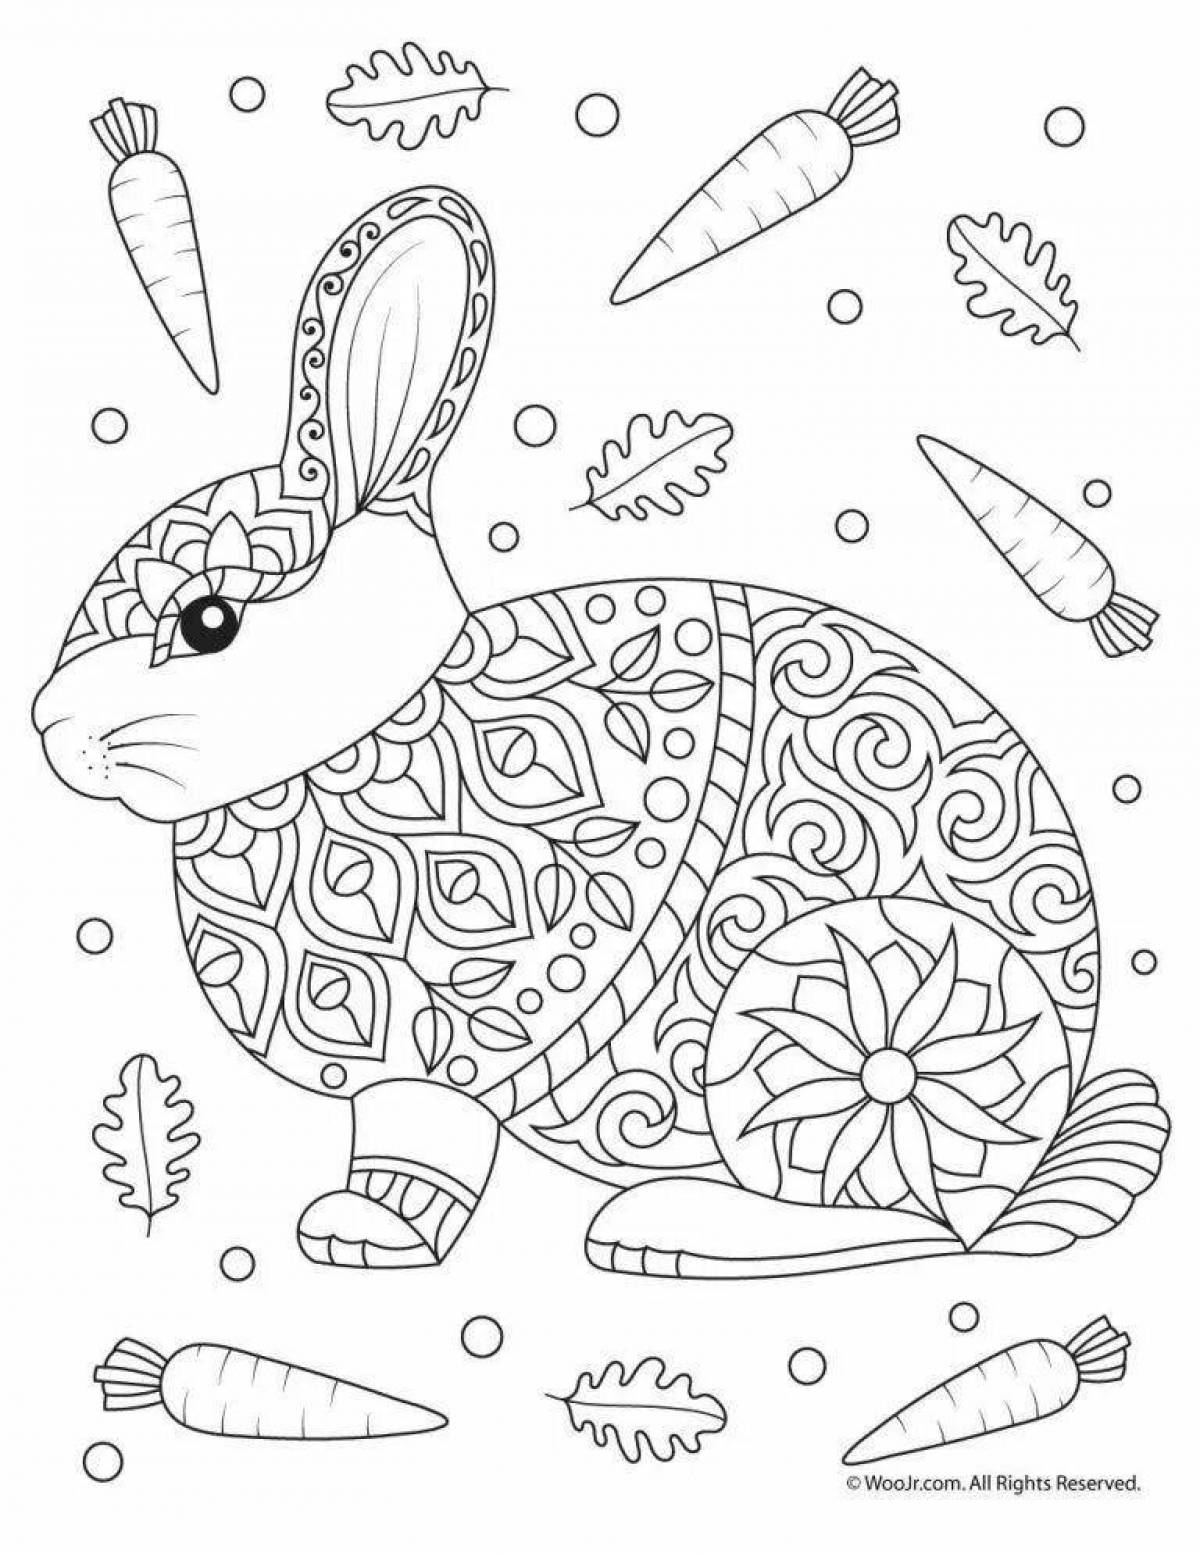 Calming anti-stress coloring hare